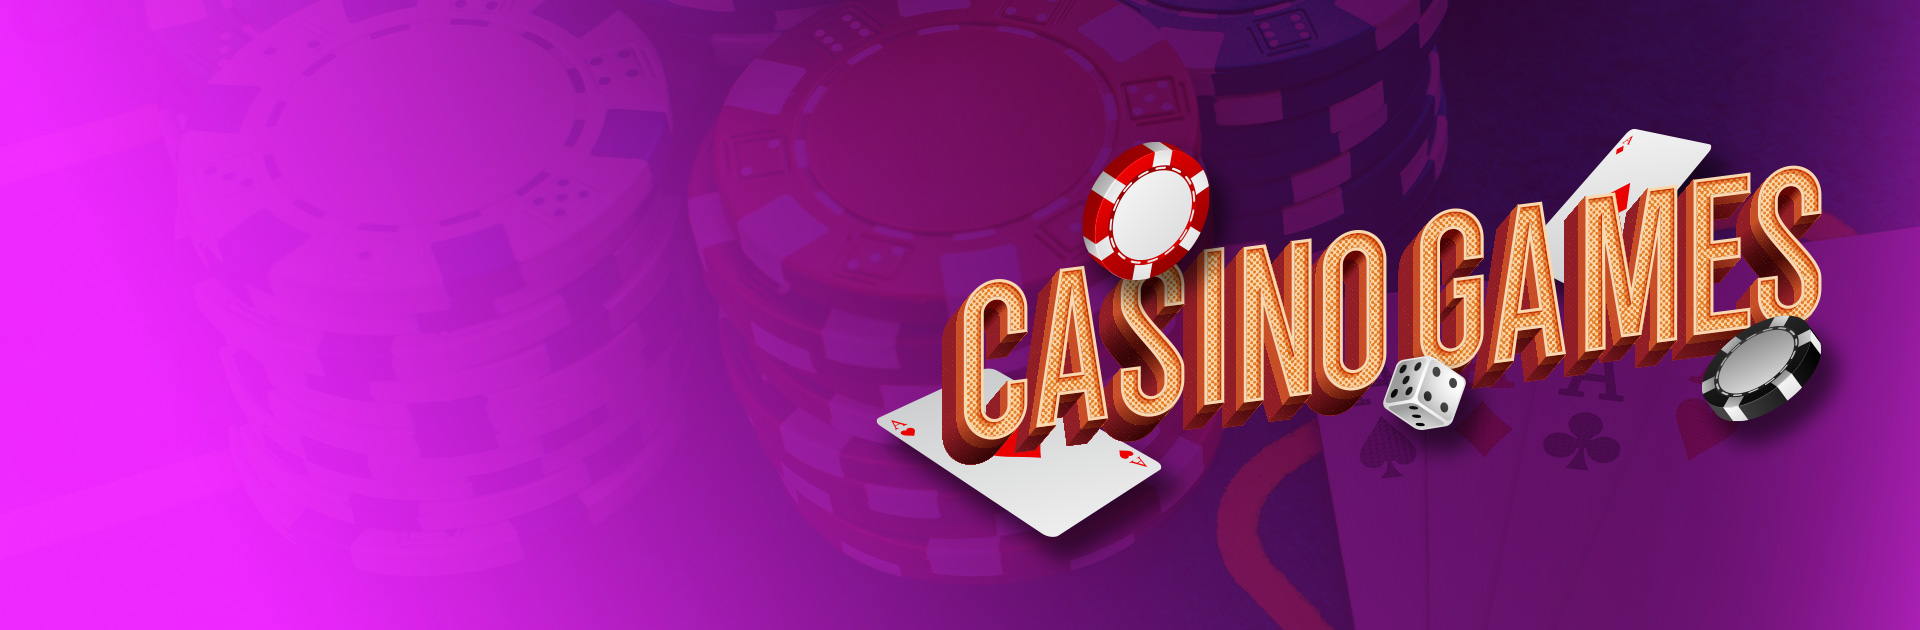 CasinoGames-Ecosystem-Desktop